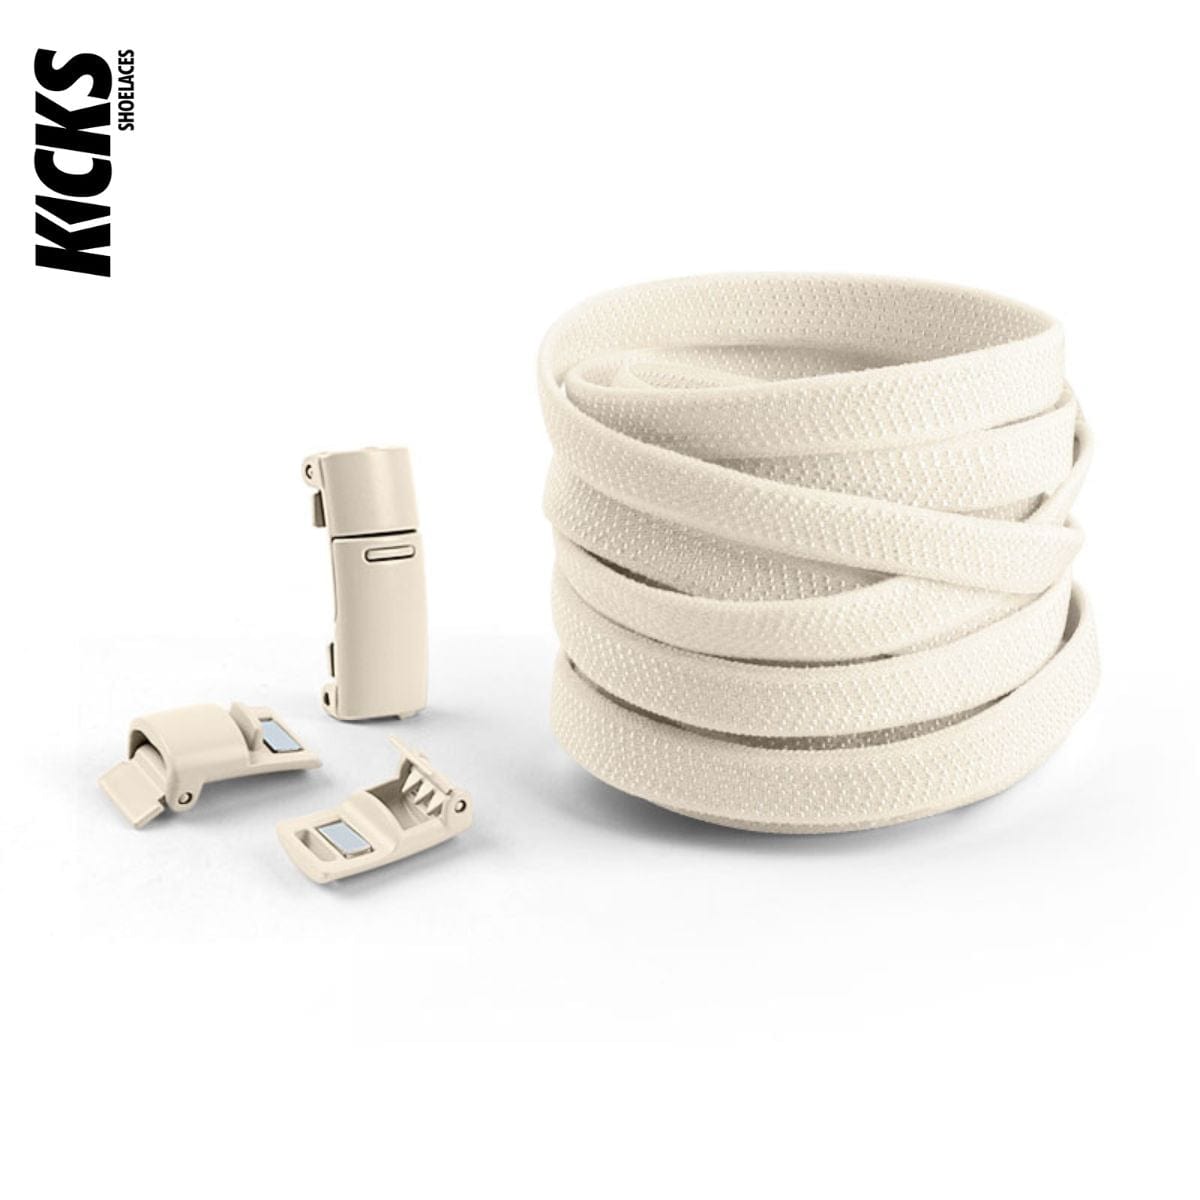 Beige No-Tie Shoelaces with Magnetic Locks - Kicks Shoelaces